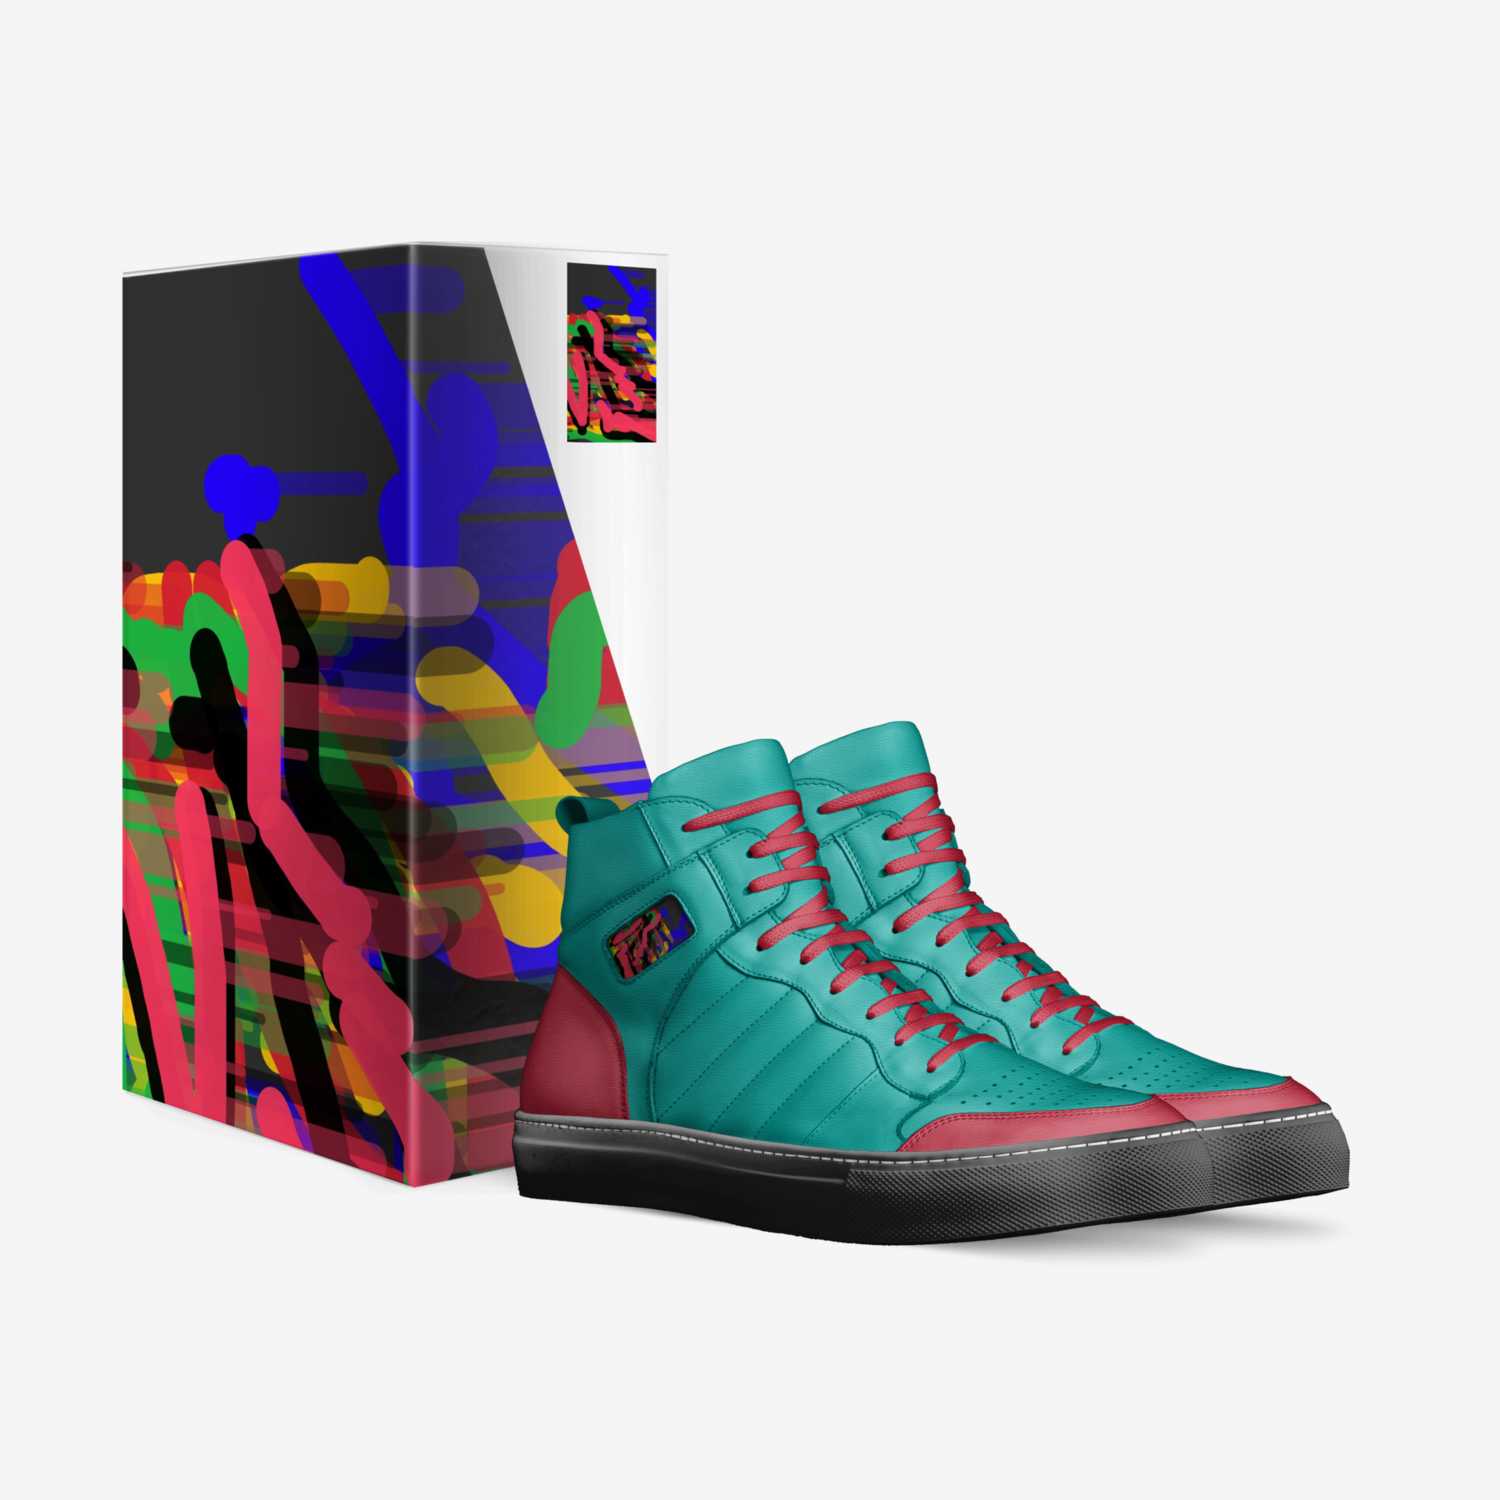 Artbycav custom made in Italy shoes by Caviar Dreams | Box view